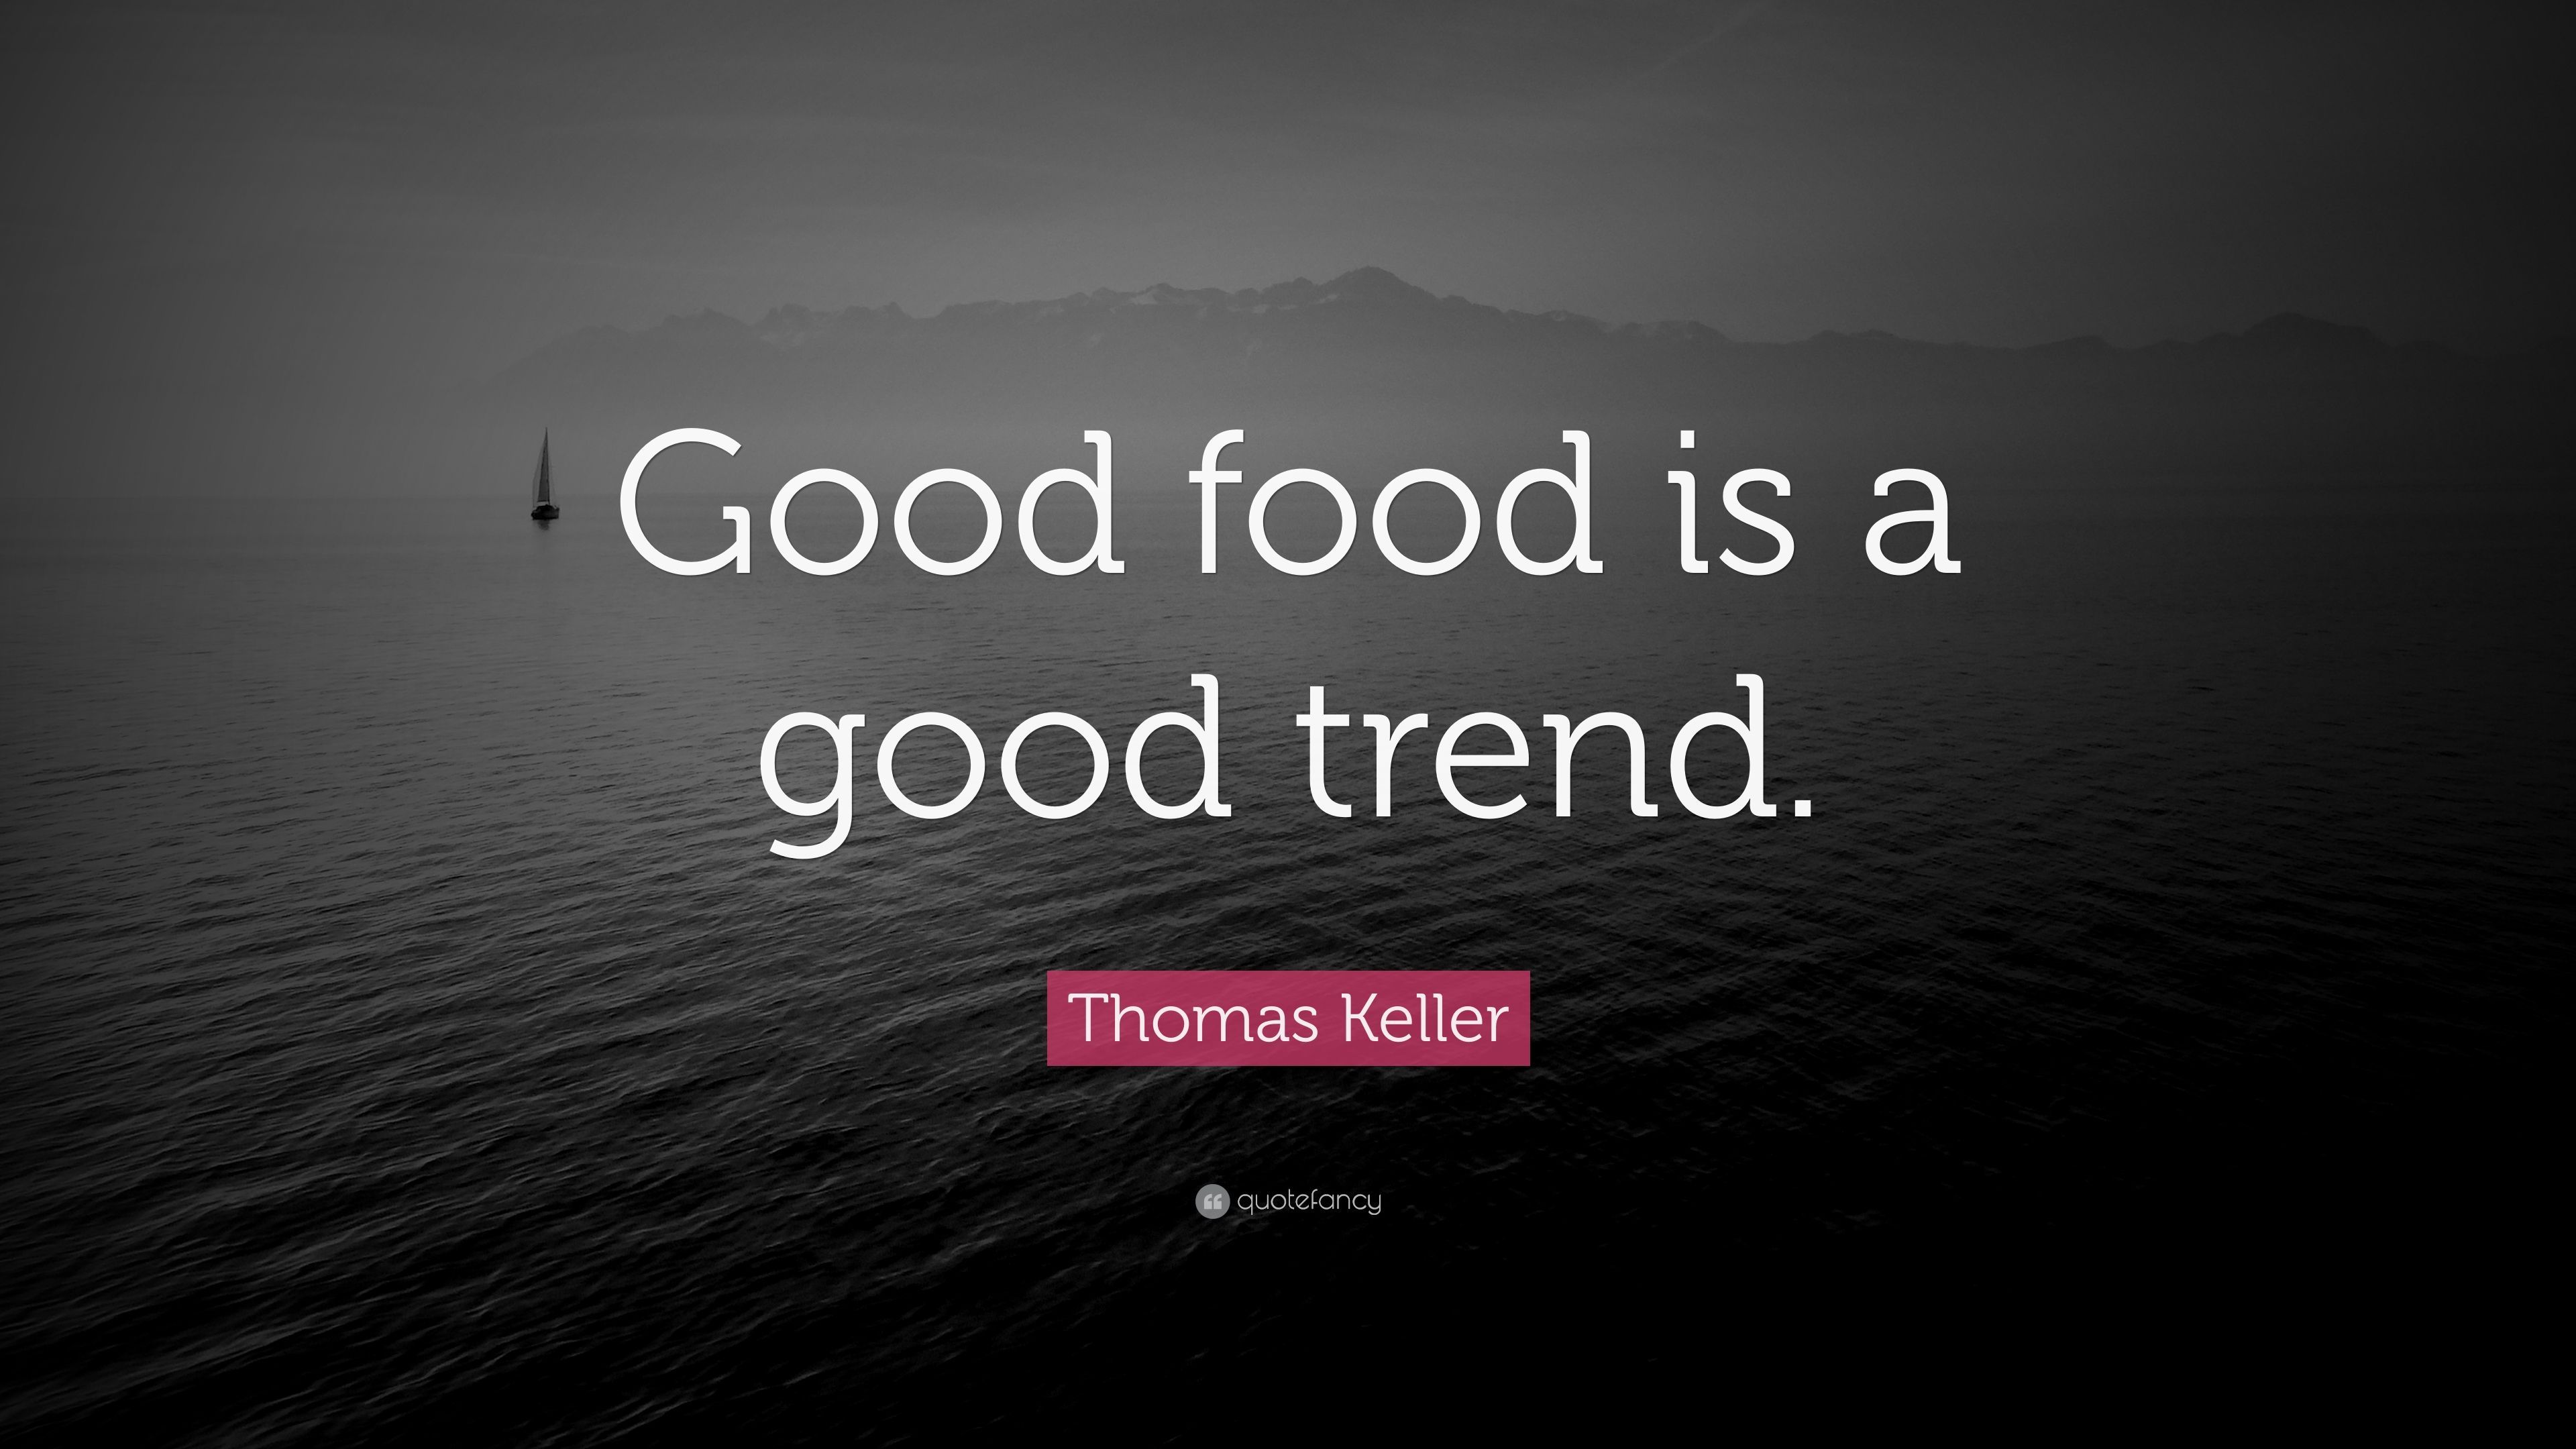 Thomas Keller Quote: “Good food is a good trend.” 7 wallpaper